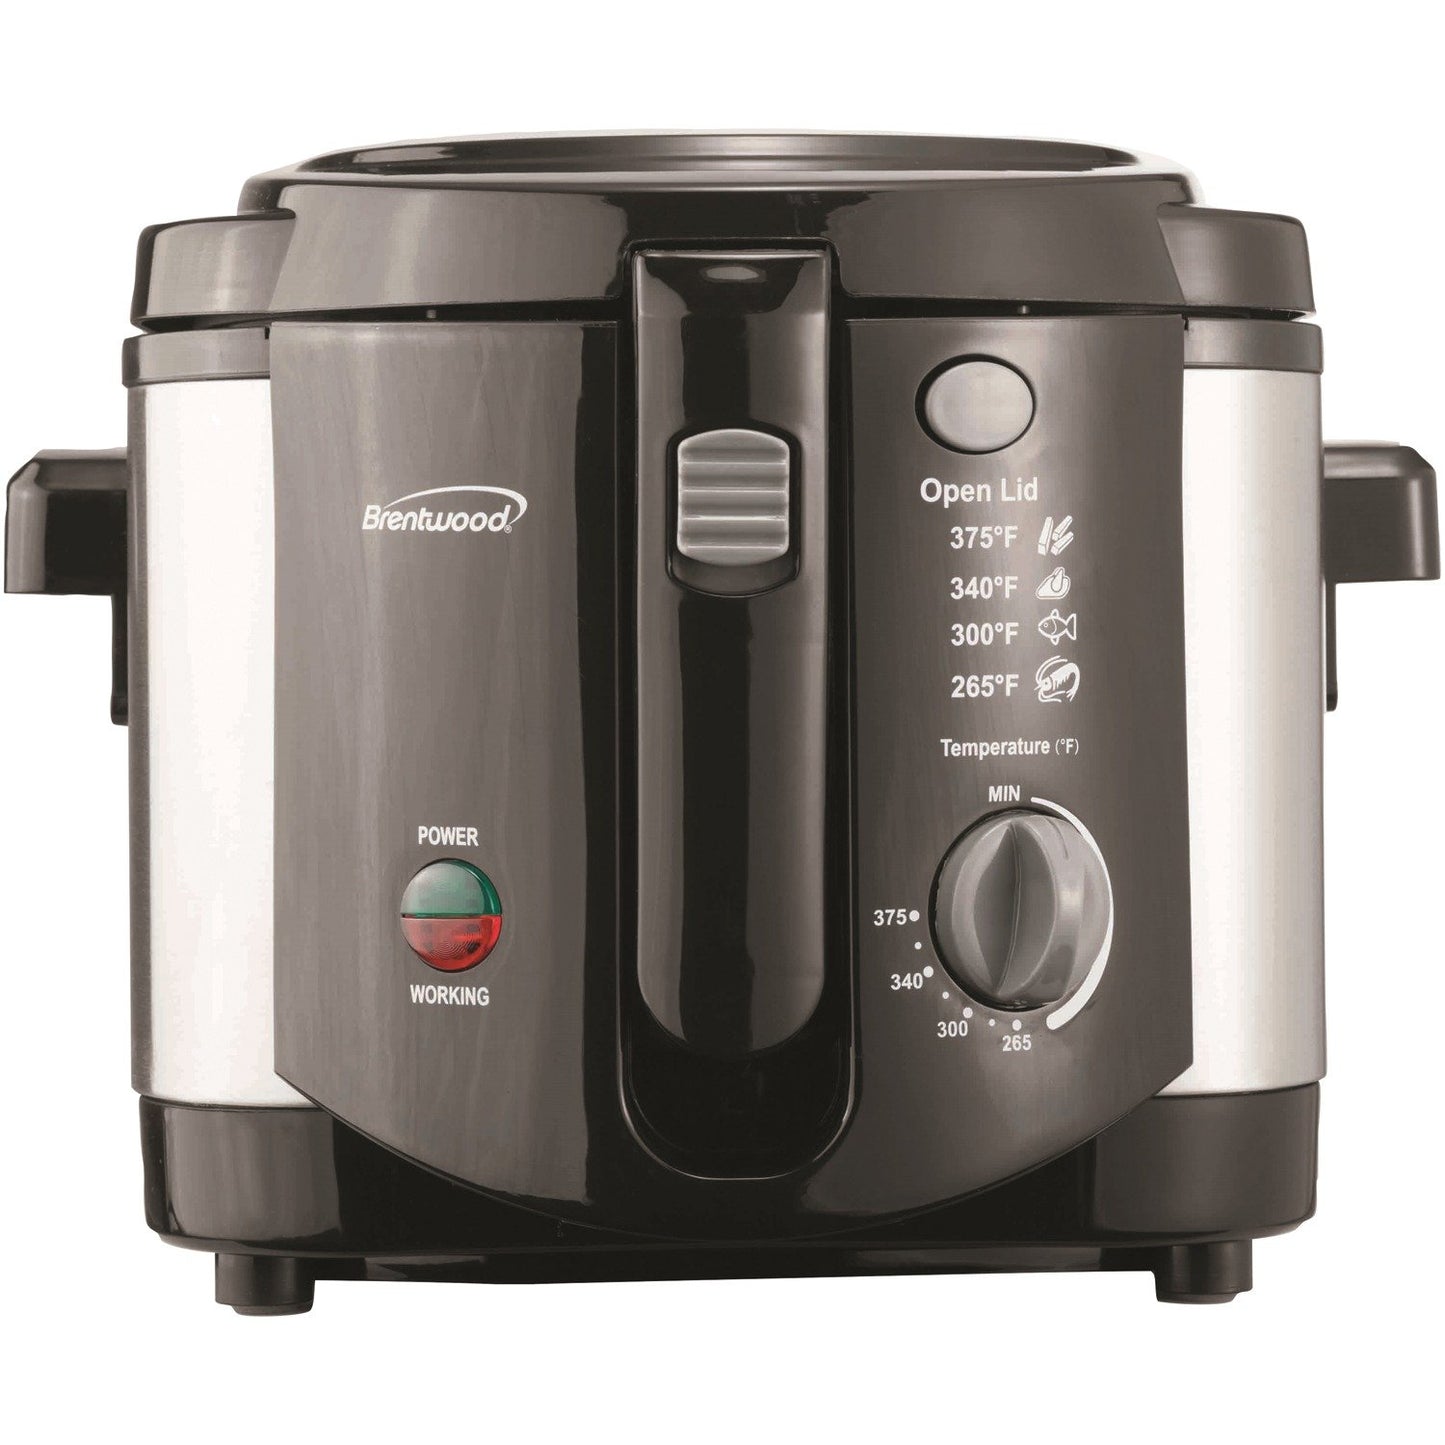 Brentwood Appliances DF720 8-Cup Electric Deep Fryer